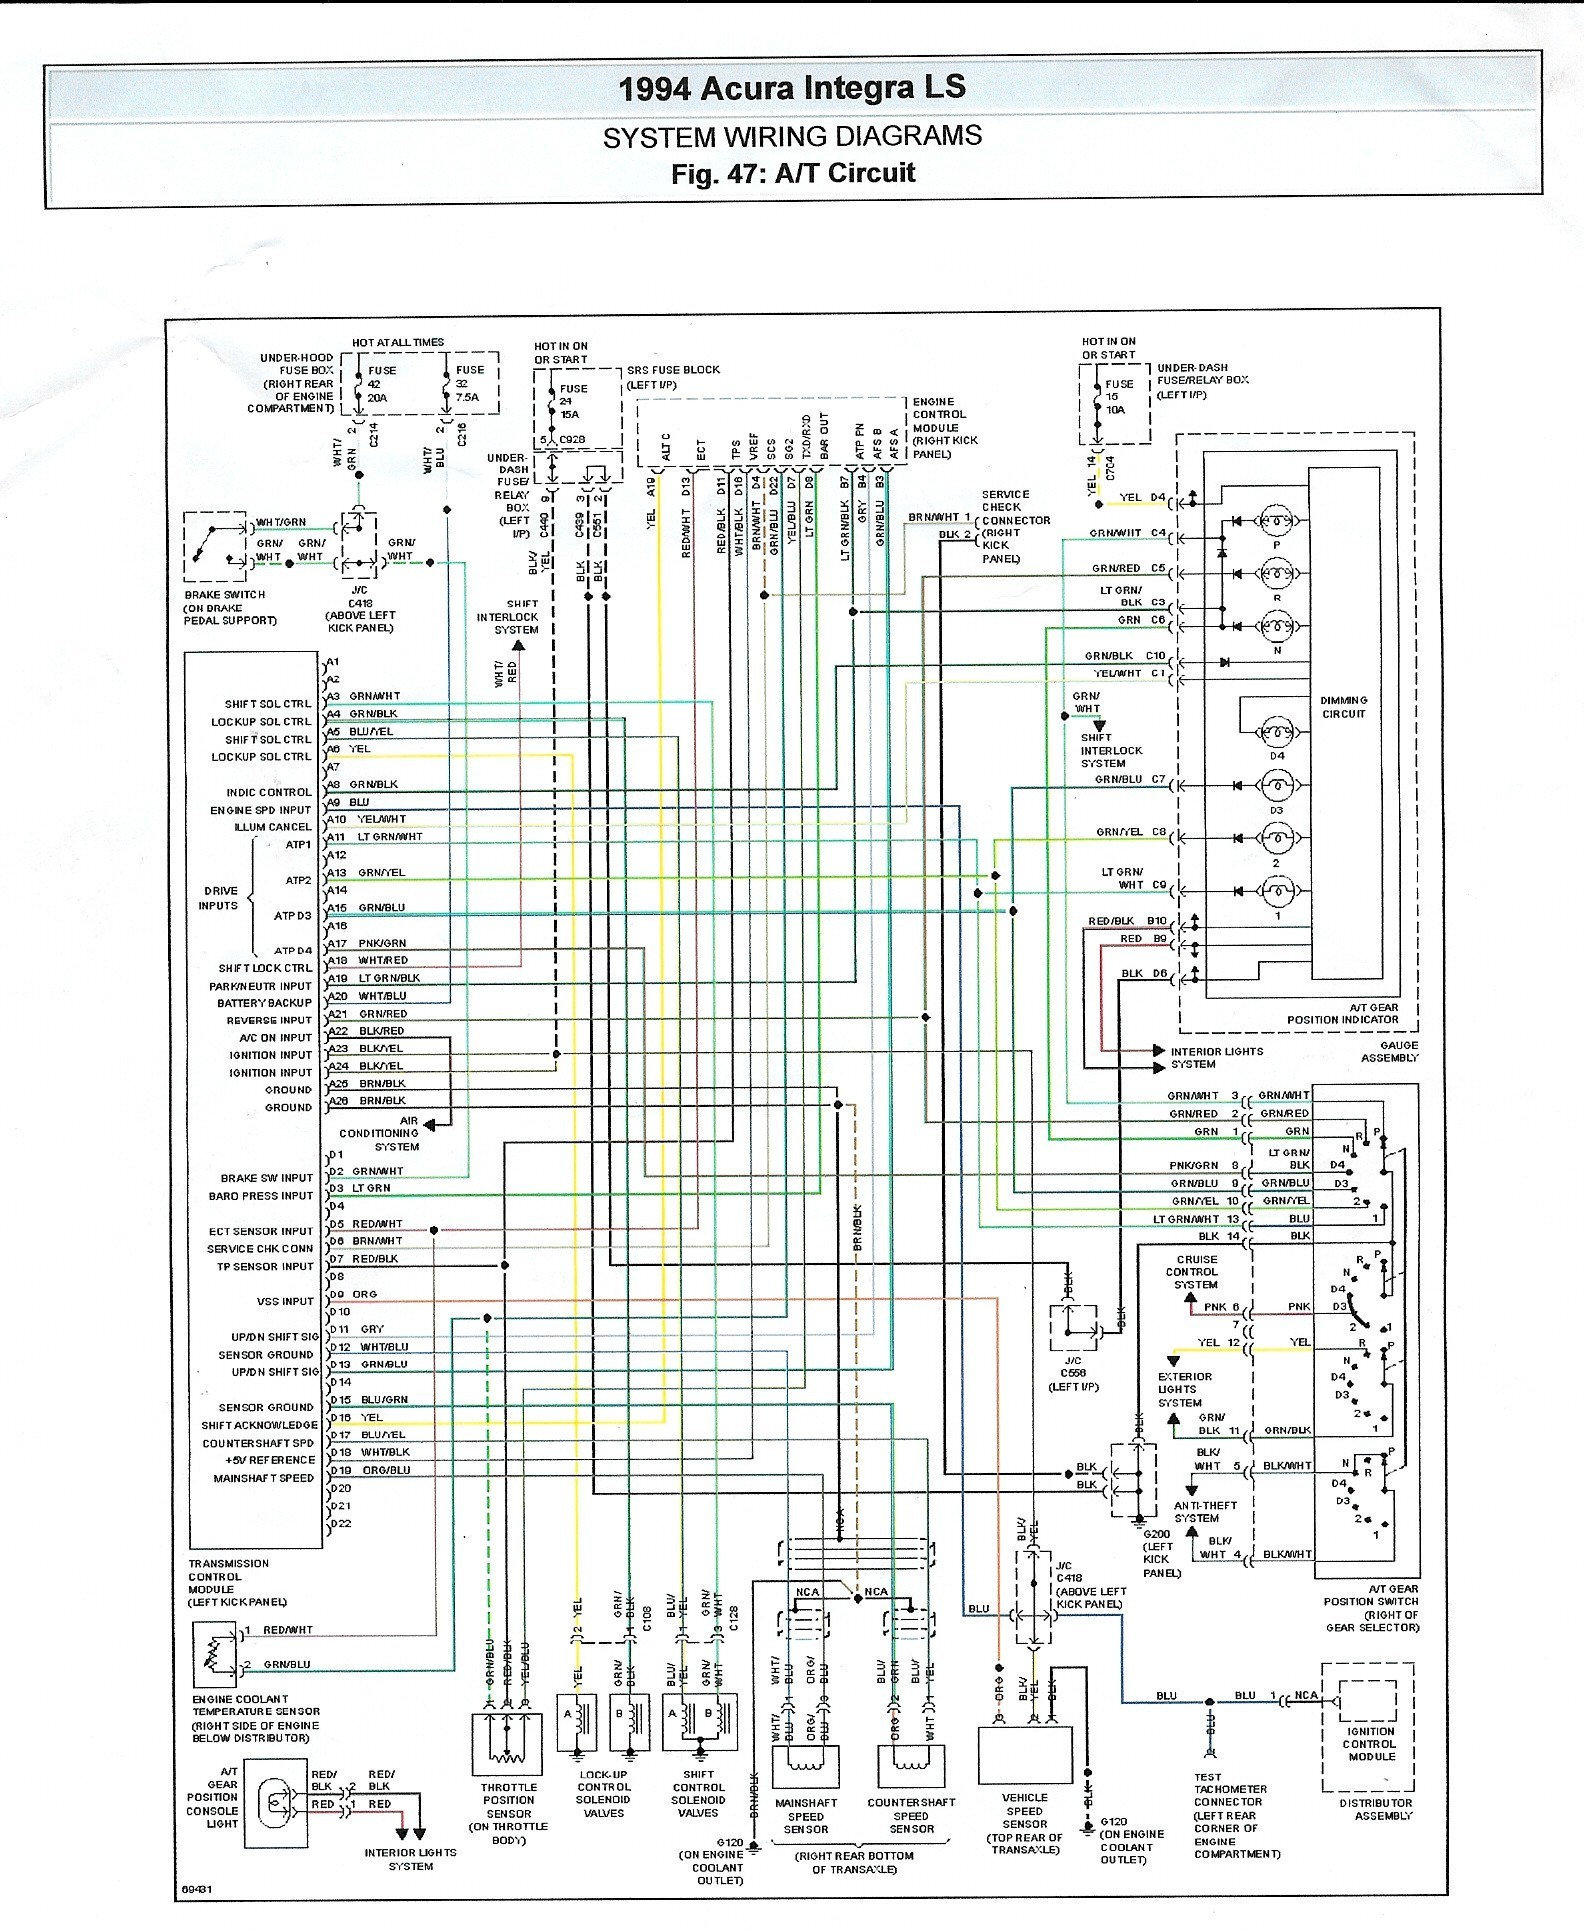 2000 Honda Accord Wiring Diagram Honda Ac Wiring Diagram Wiring Diagram Of 2000 Honda Accord Wiring Diagram